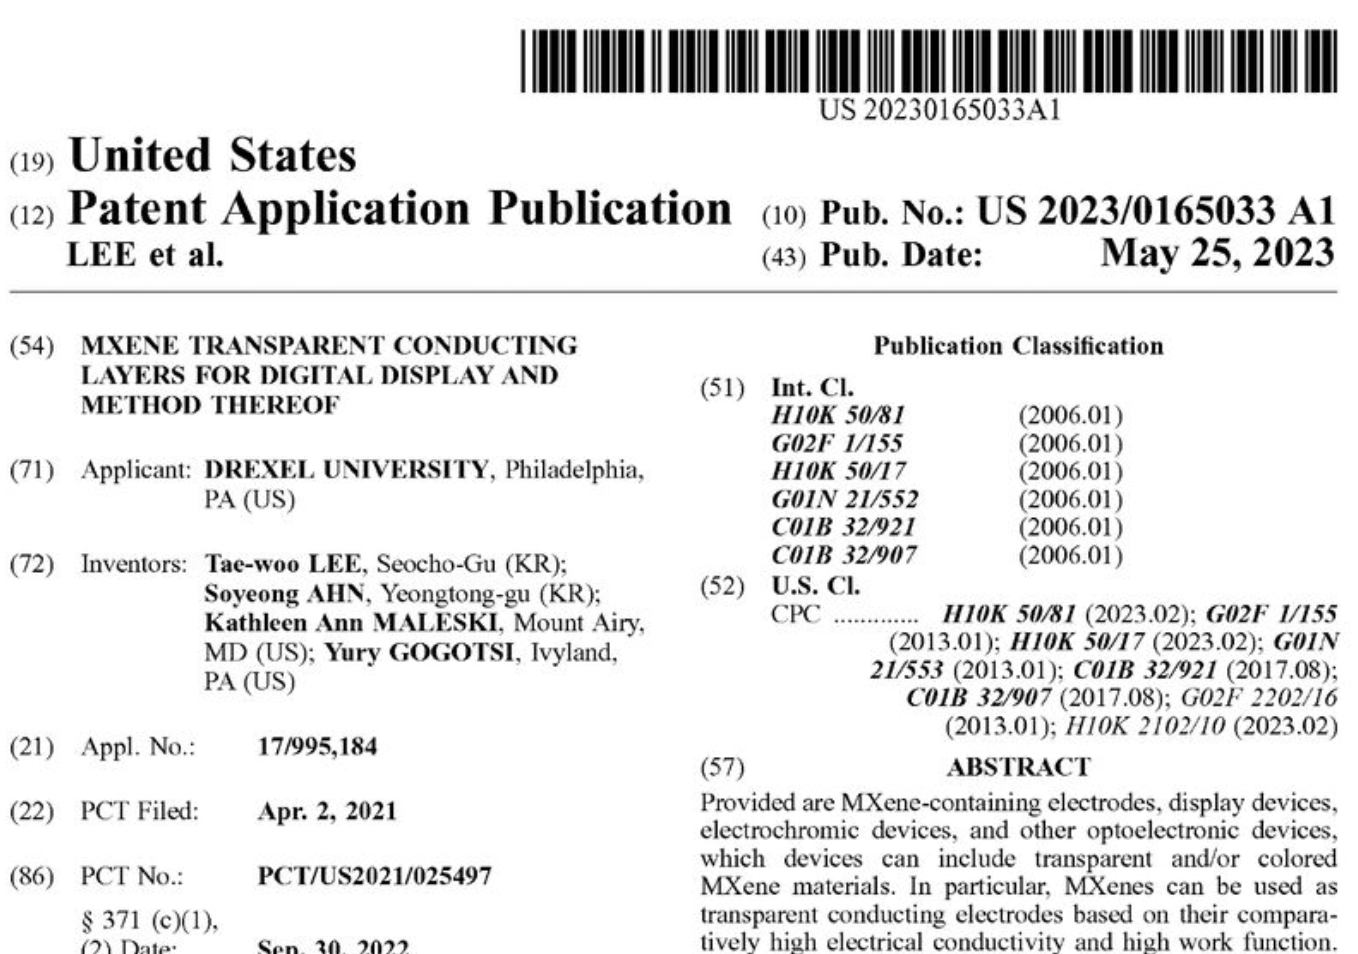 Gogotsi Applies for New Patent